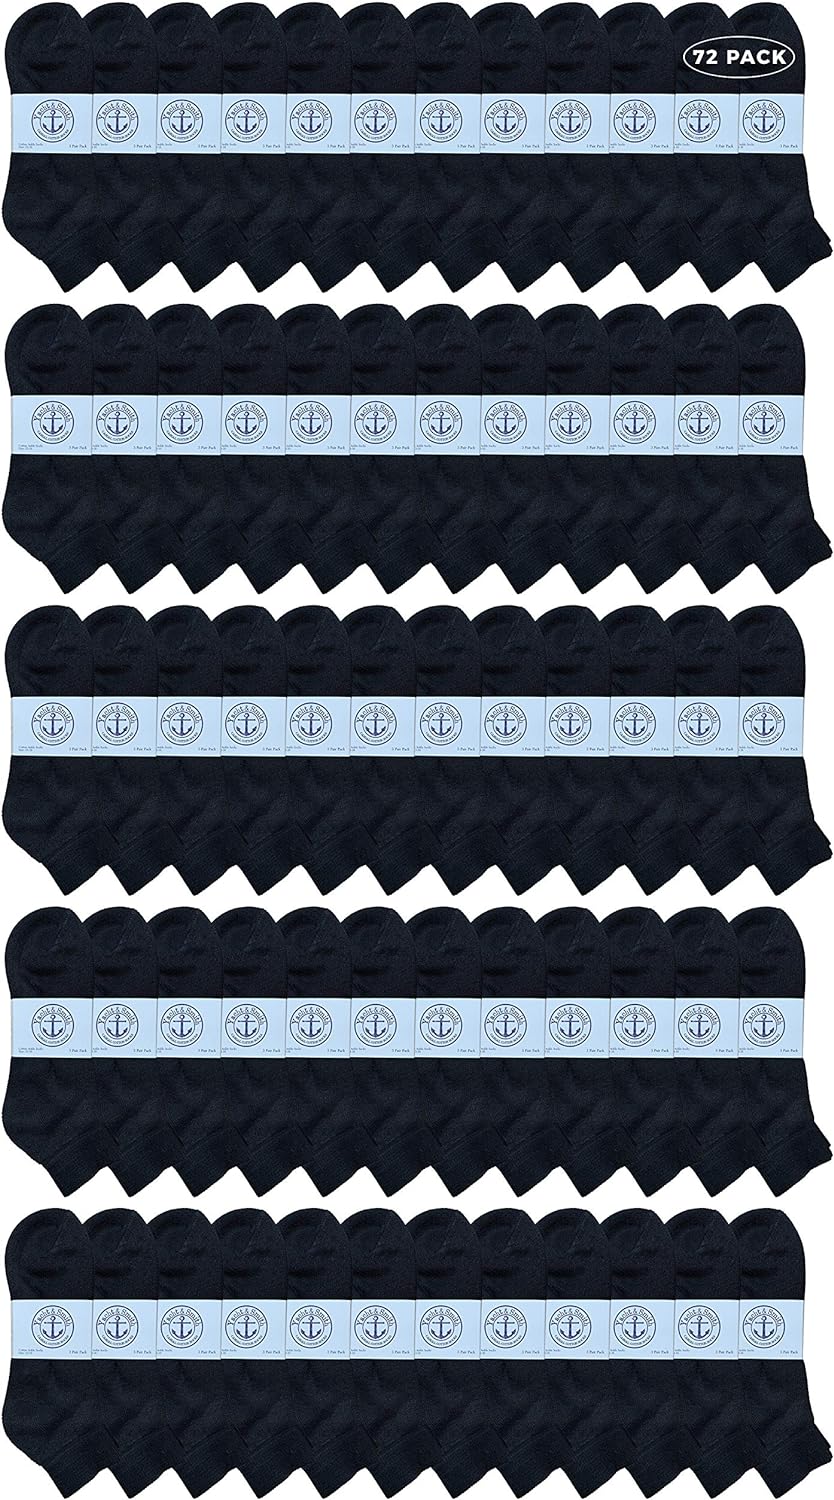 Yacht & Smith Mens Wholesale Bulk Mid Ankle Socks, Big And Tall Cotton Sport Athletic Socks - 13-16 - Black - 72 Packs